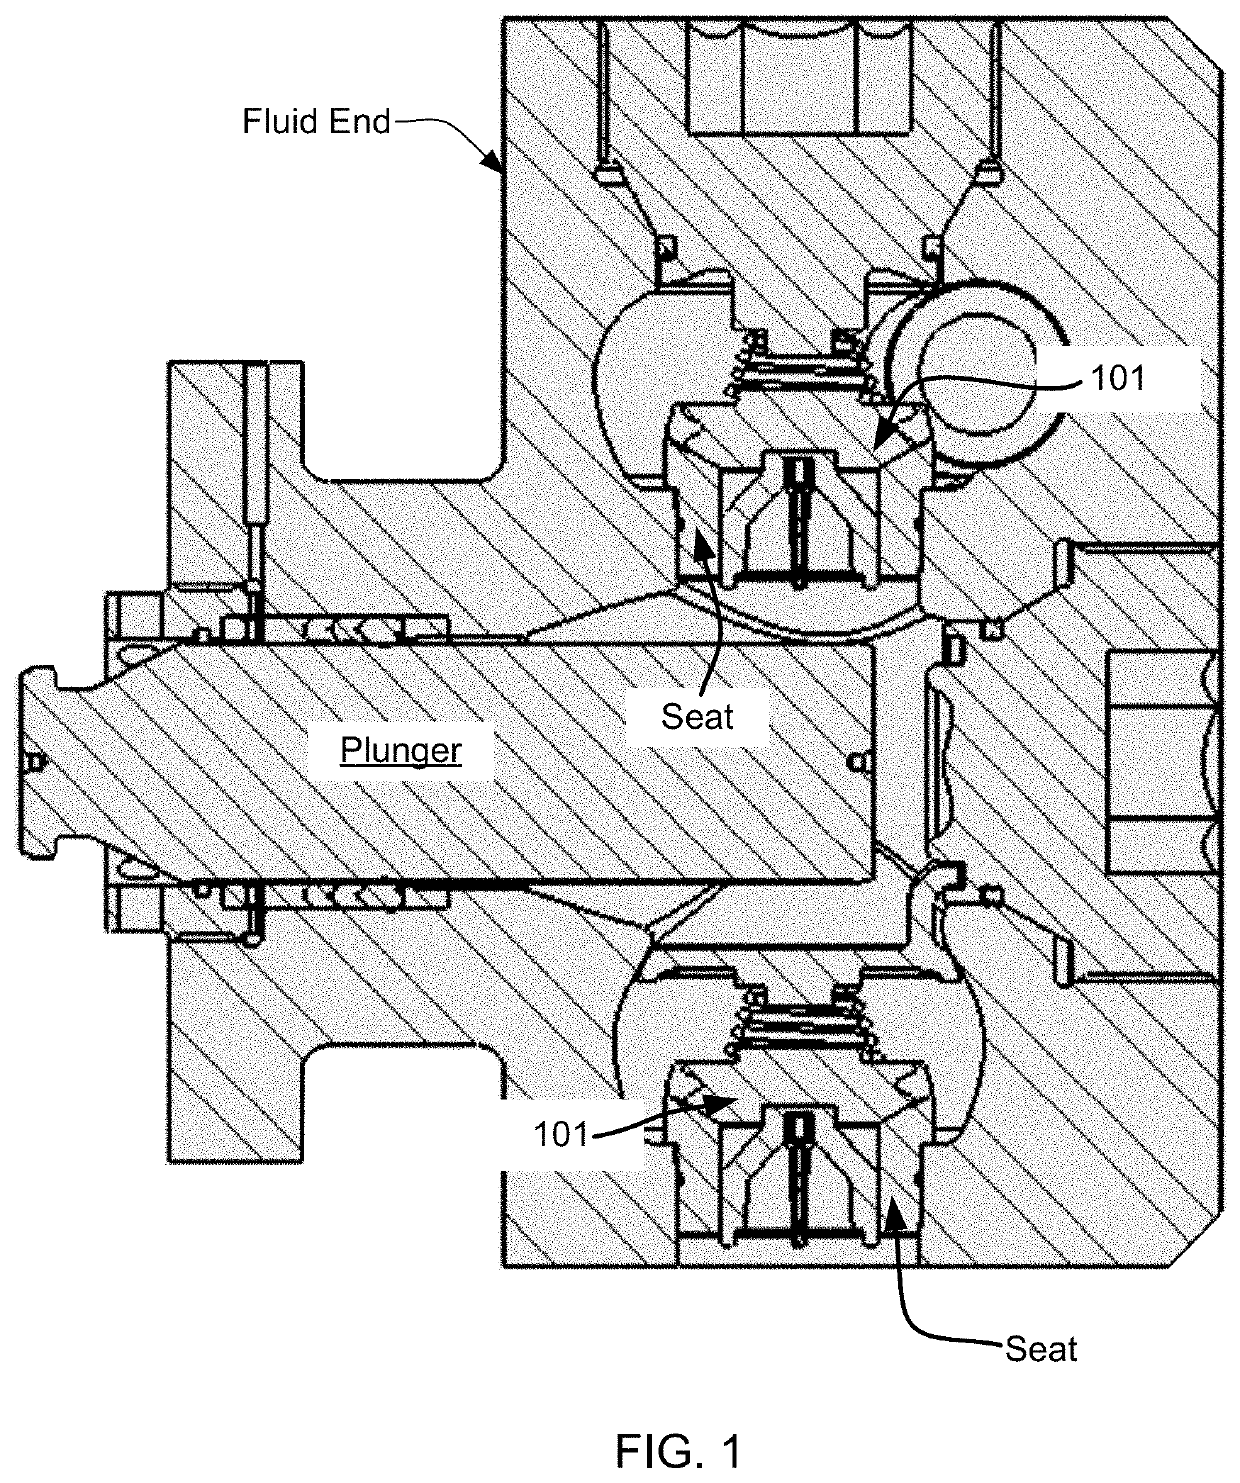 Frac pump valve assembly